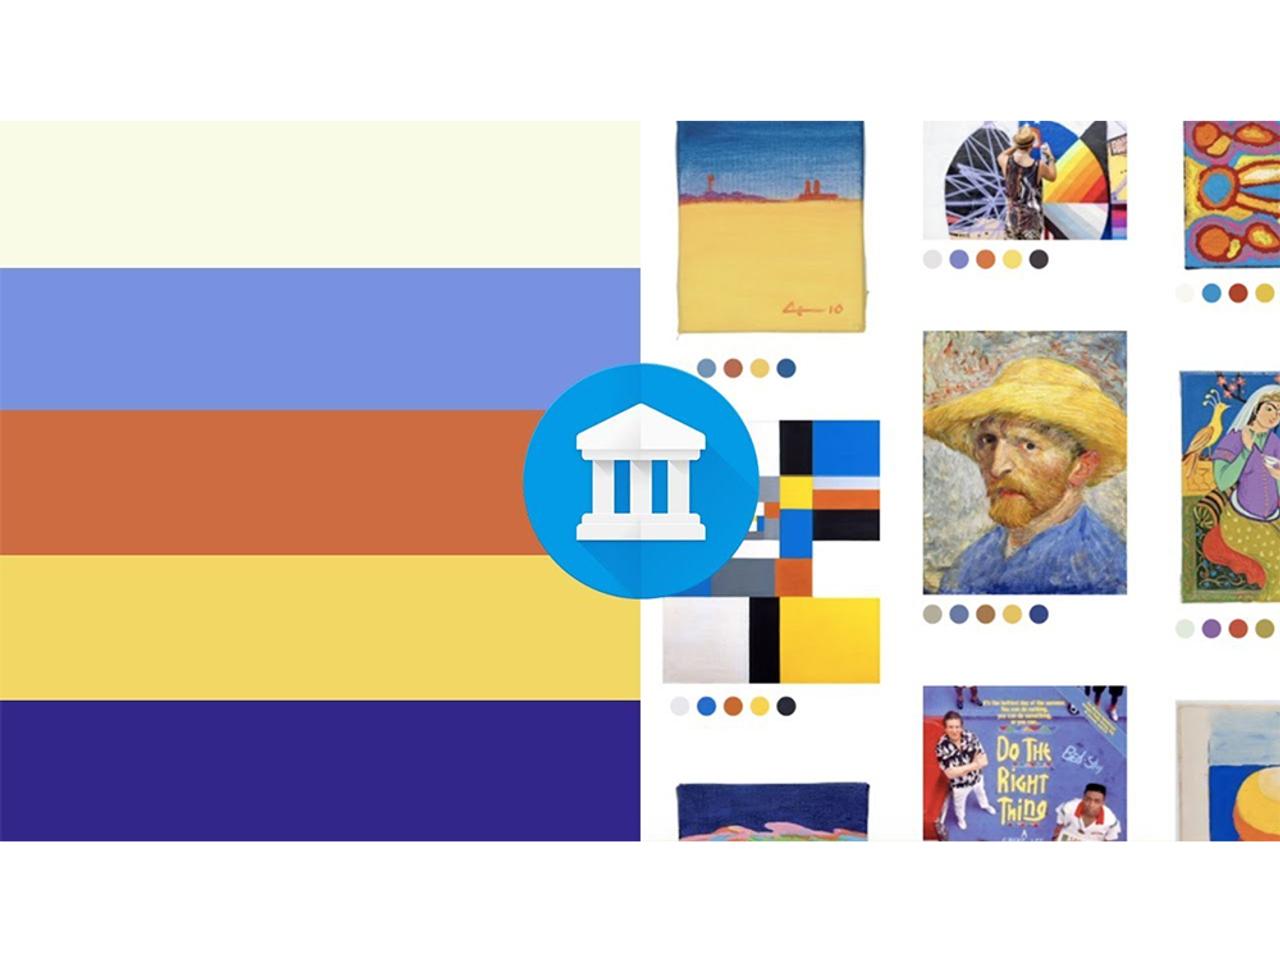 Googleの美術鑑賞アプリ｢Google Arts & Culture｣、指定した色やお絵描きからアート作品を見つけ出す新機能を公開